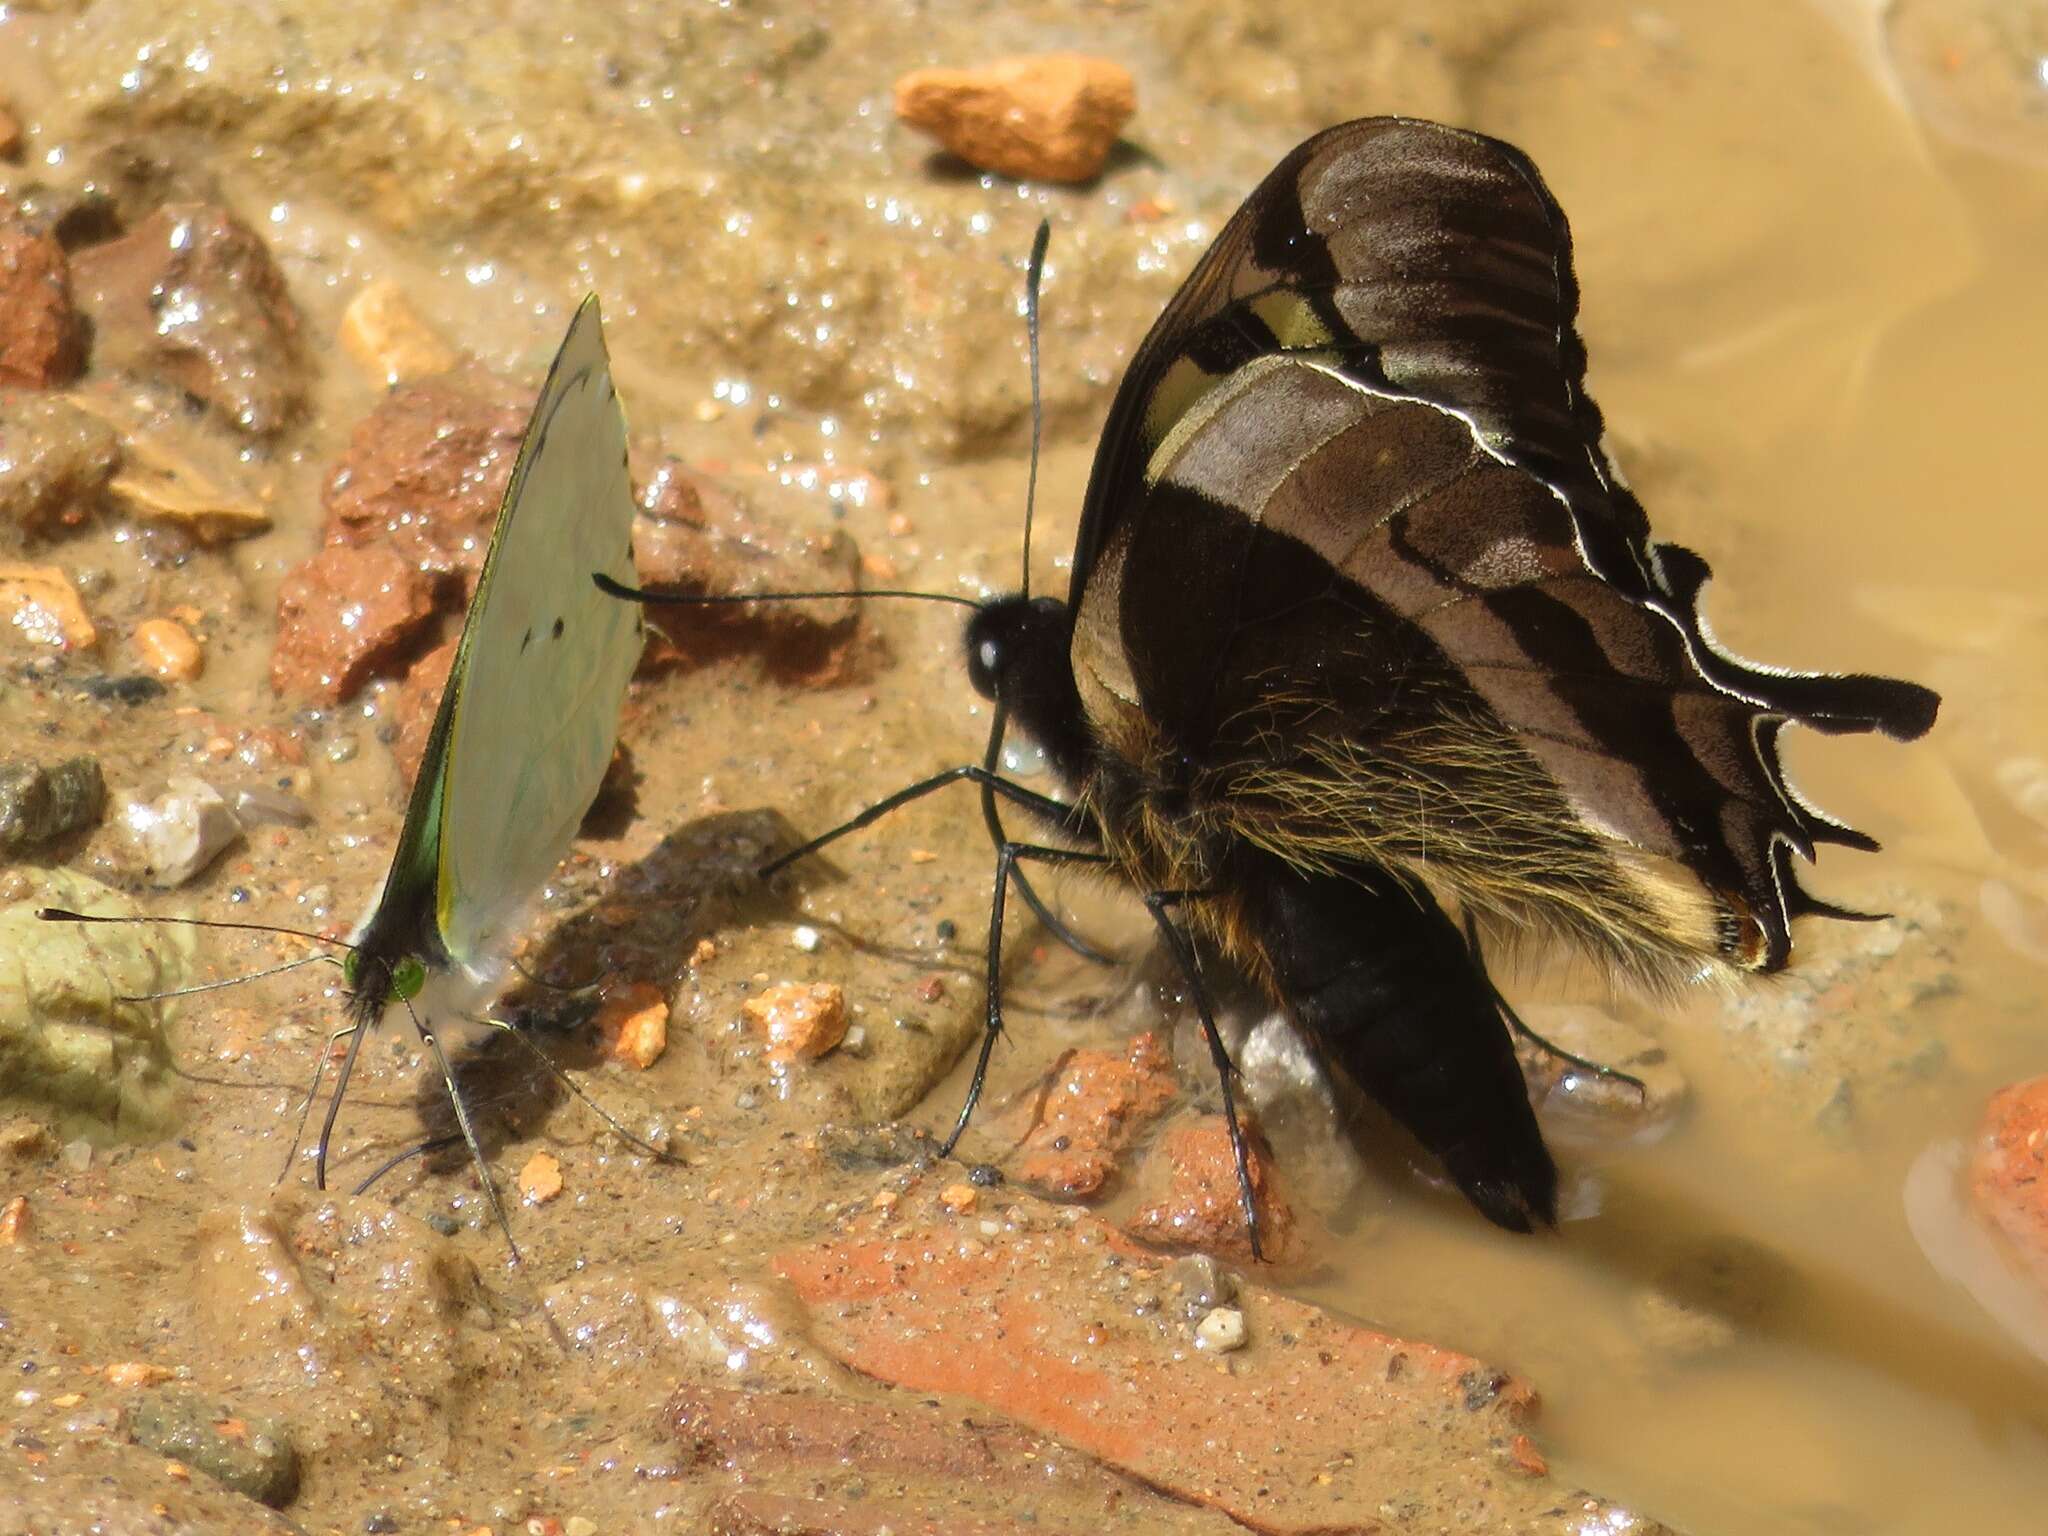 Image of Papilio warscewiczii Hopffer 1865